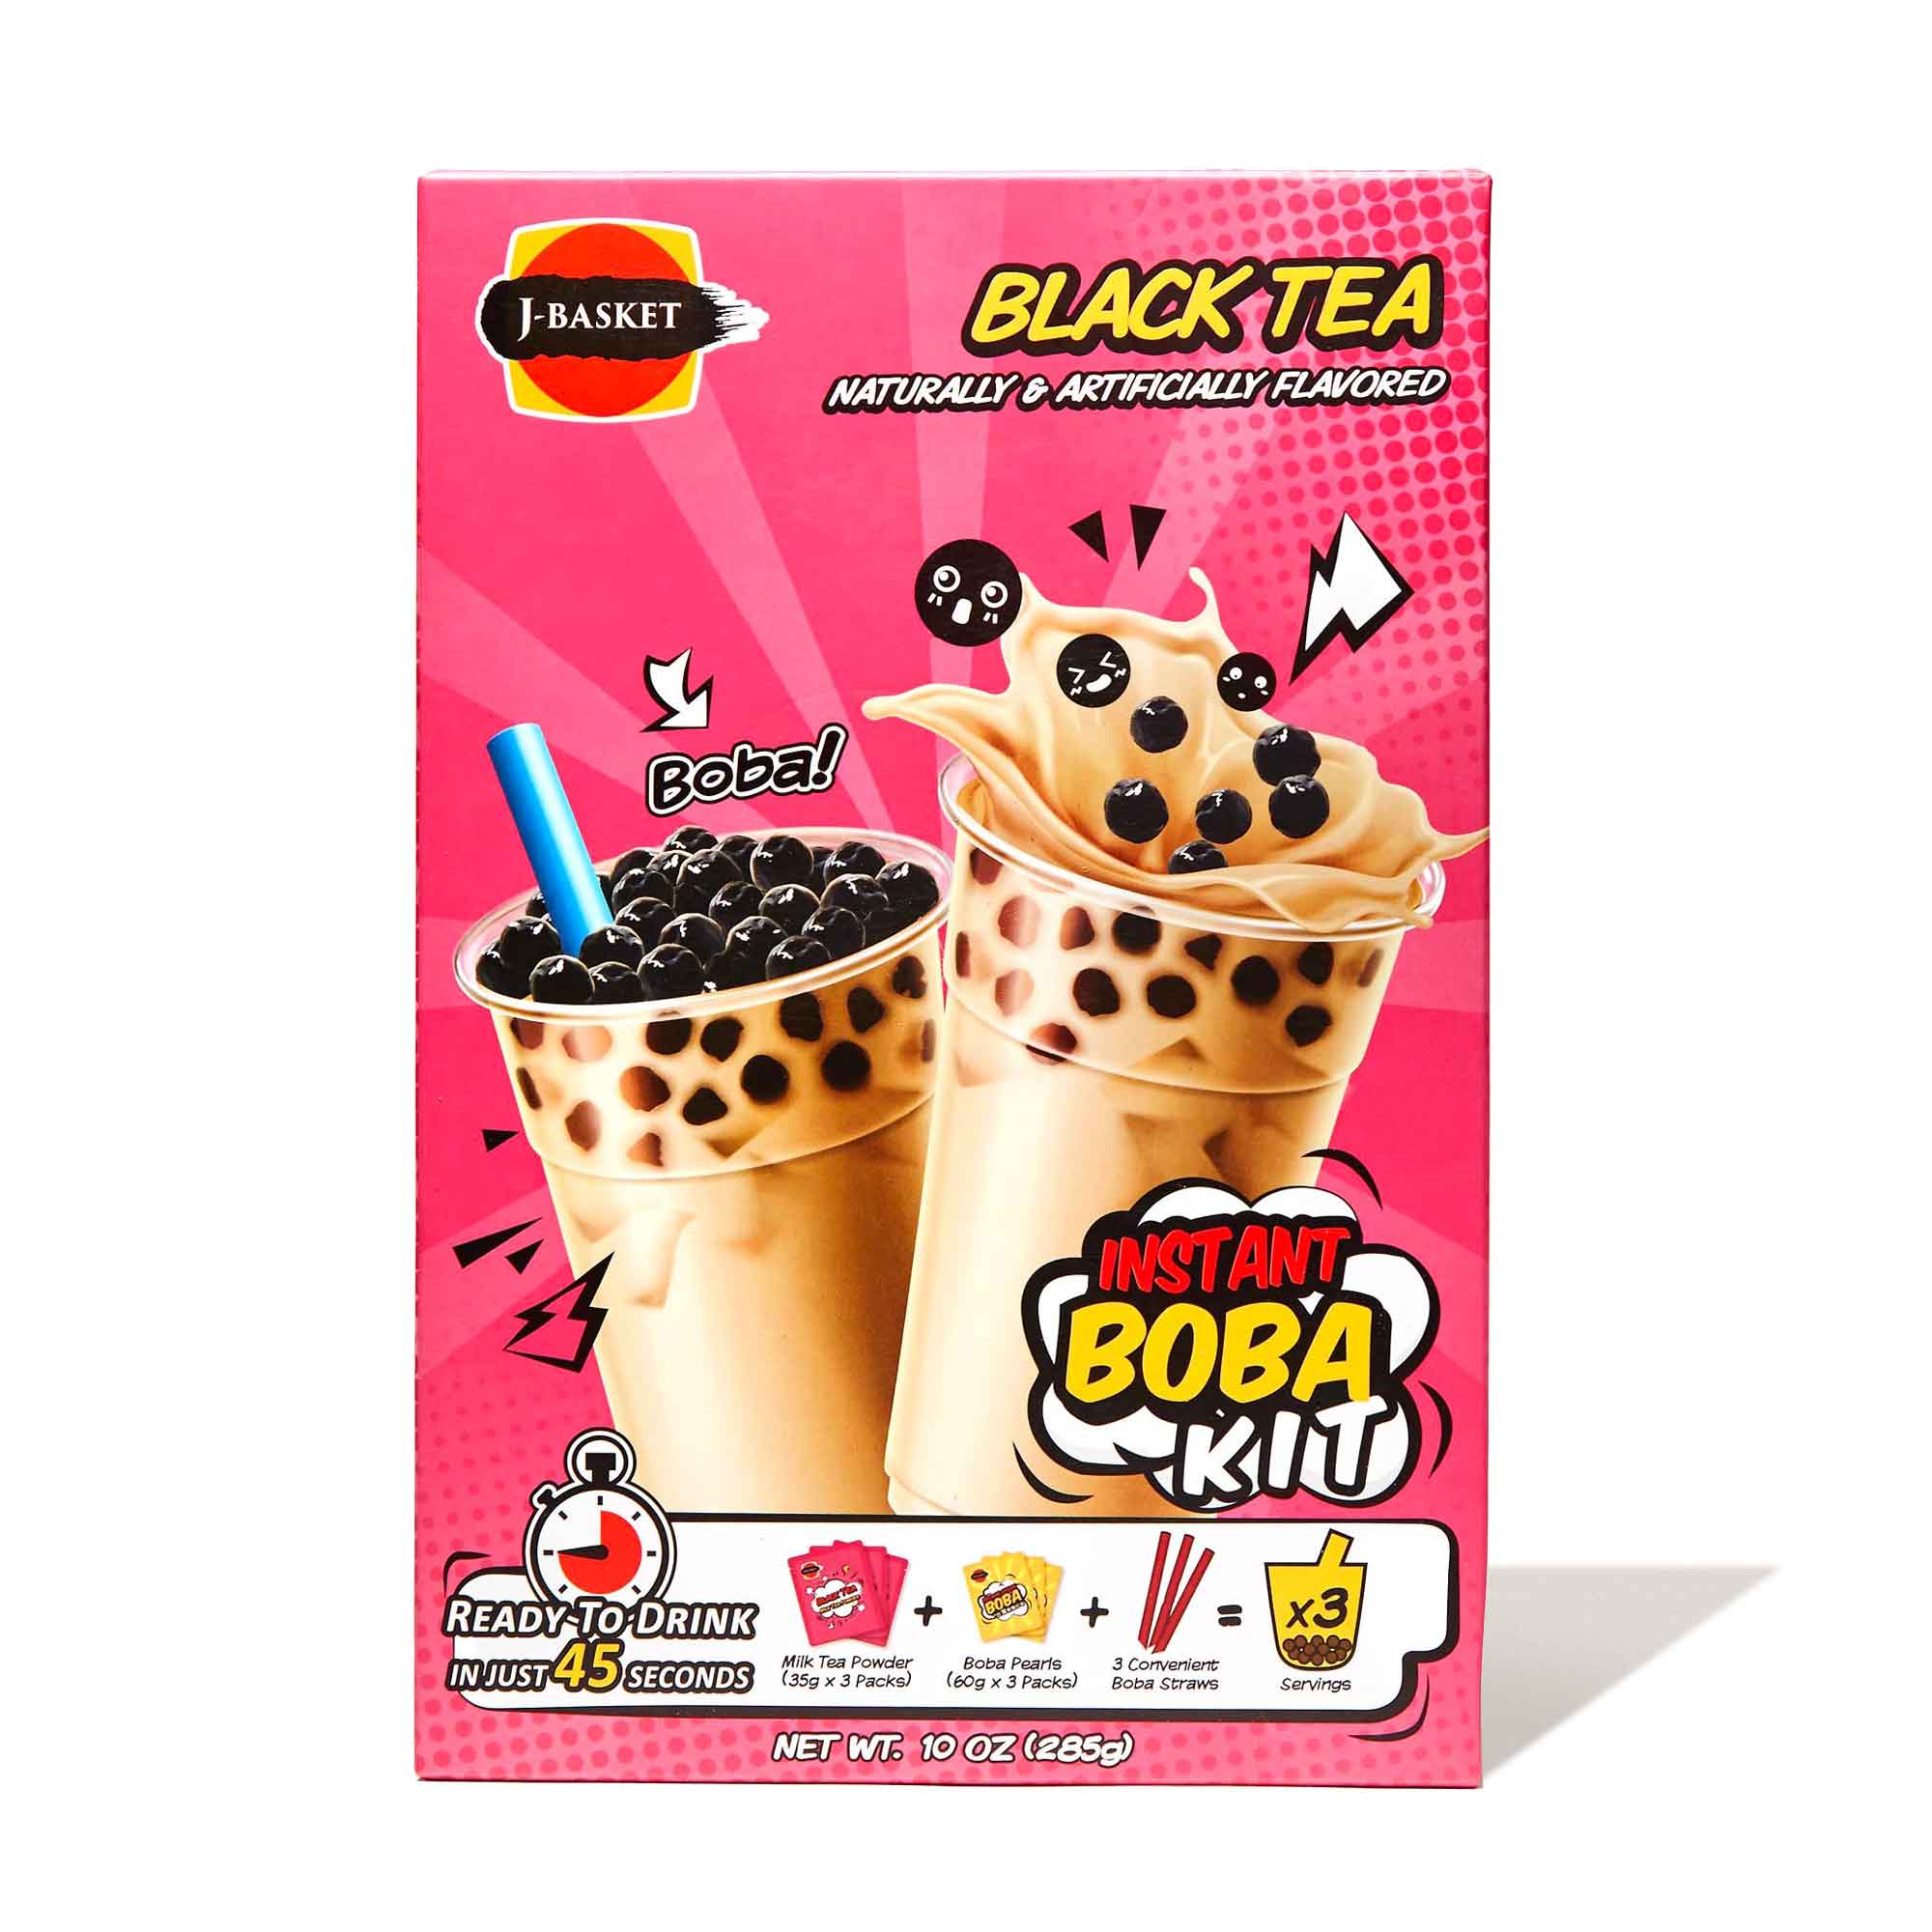 Bubble Tea Kit - Japanese Matcha